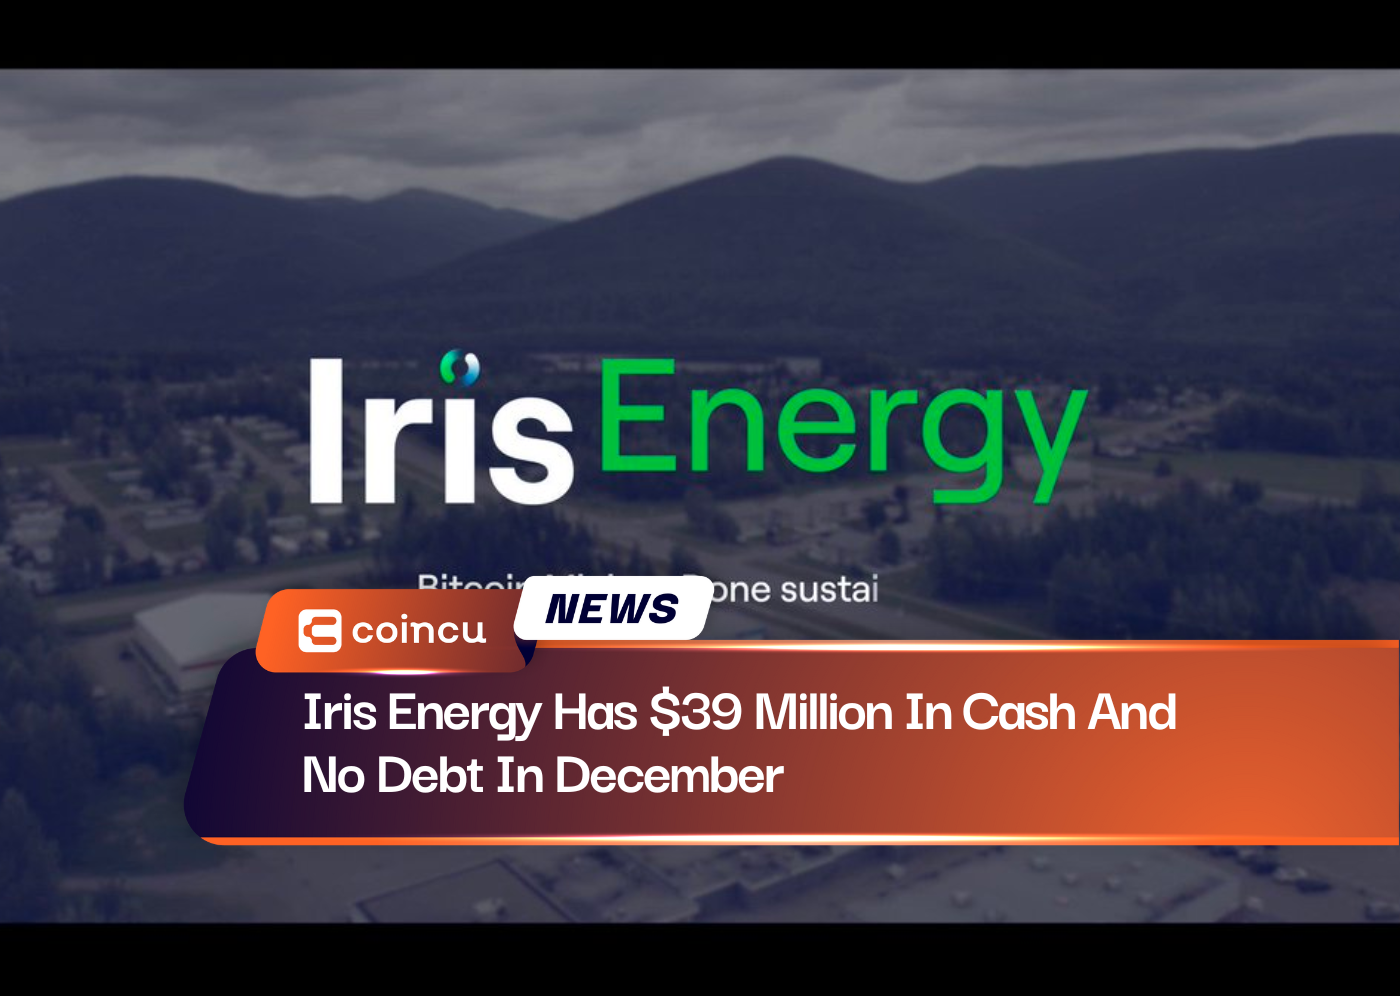 Iris Energy Has $39 Million In Cash And No Debt In December